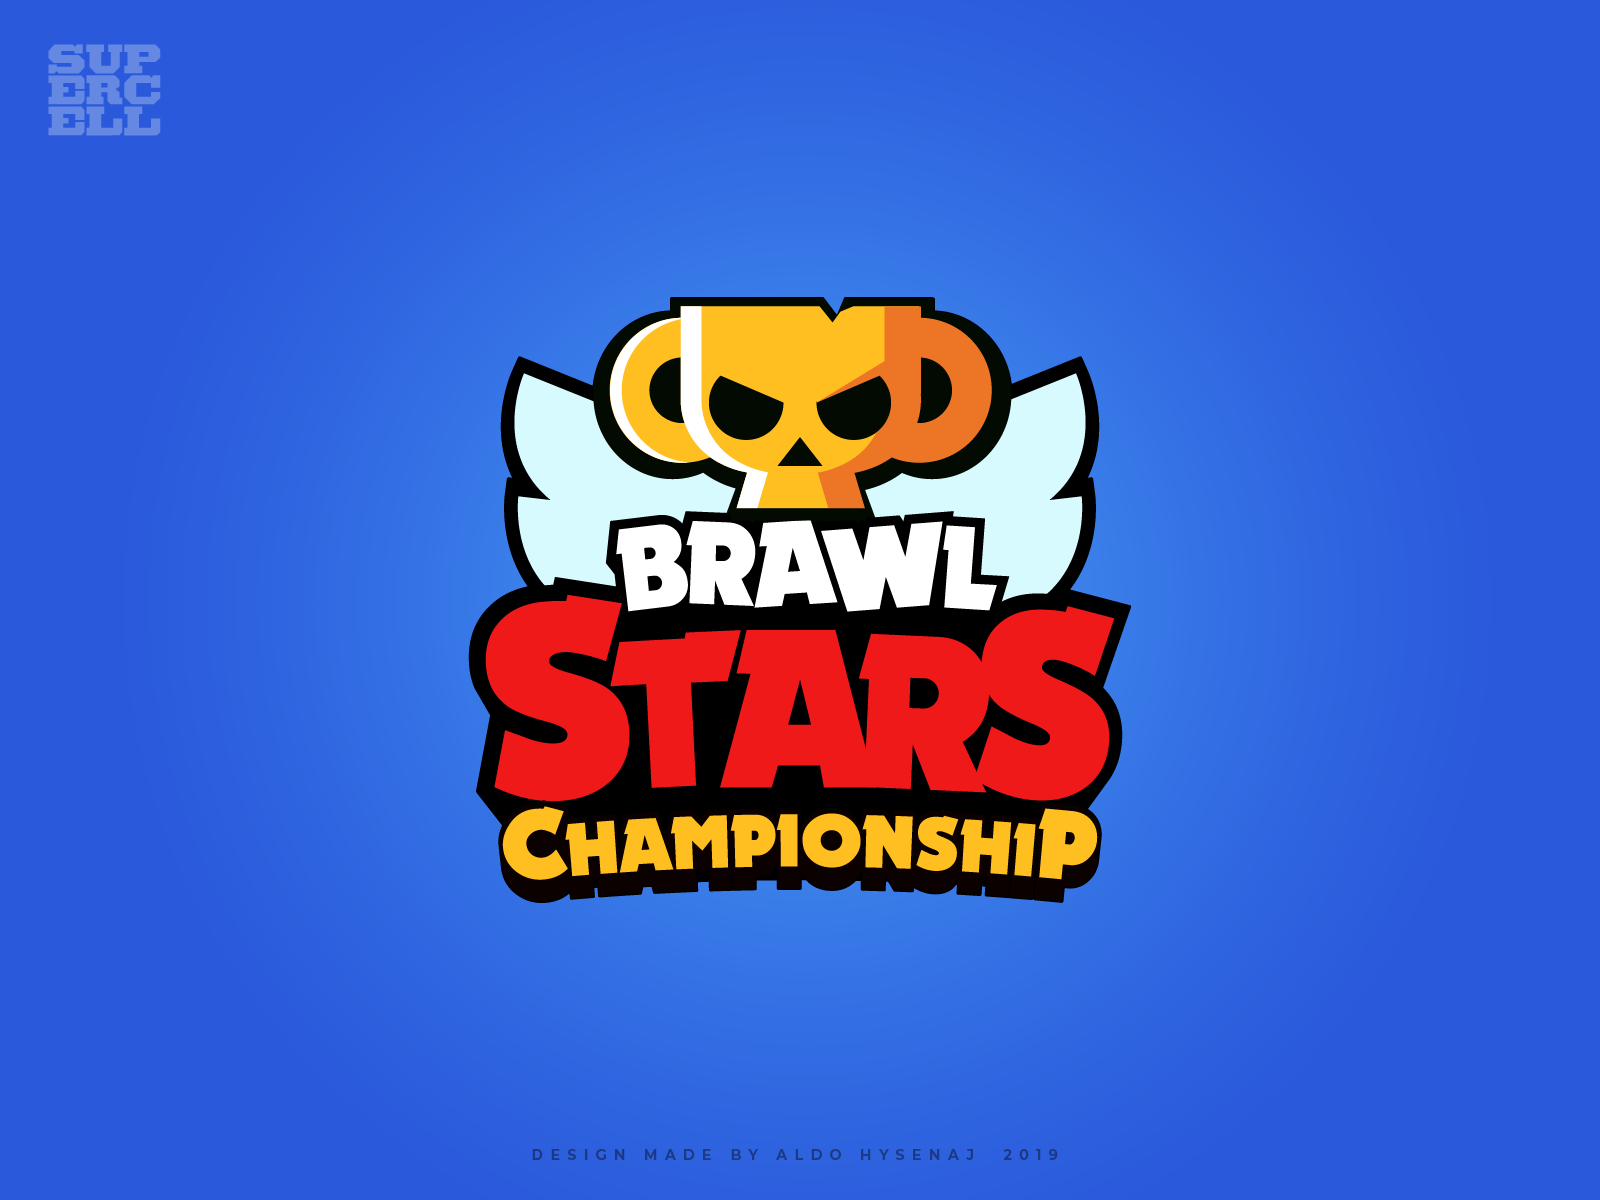 Brawl Stars Championship Logo By Aldo Hysenaj On Dribbble - brawl stars tournament 2020